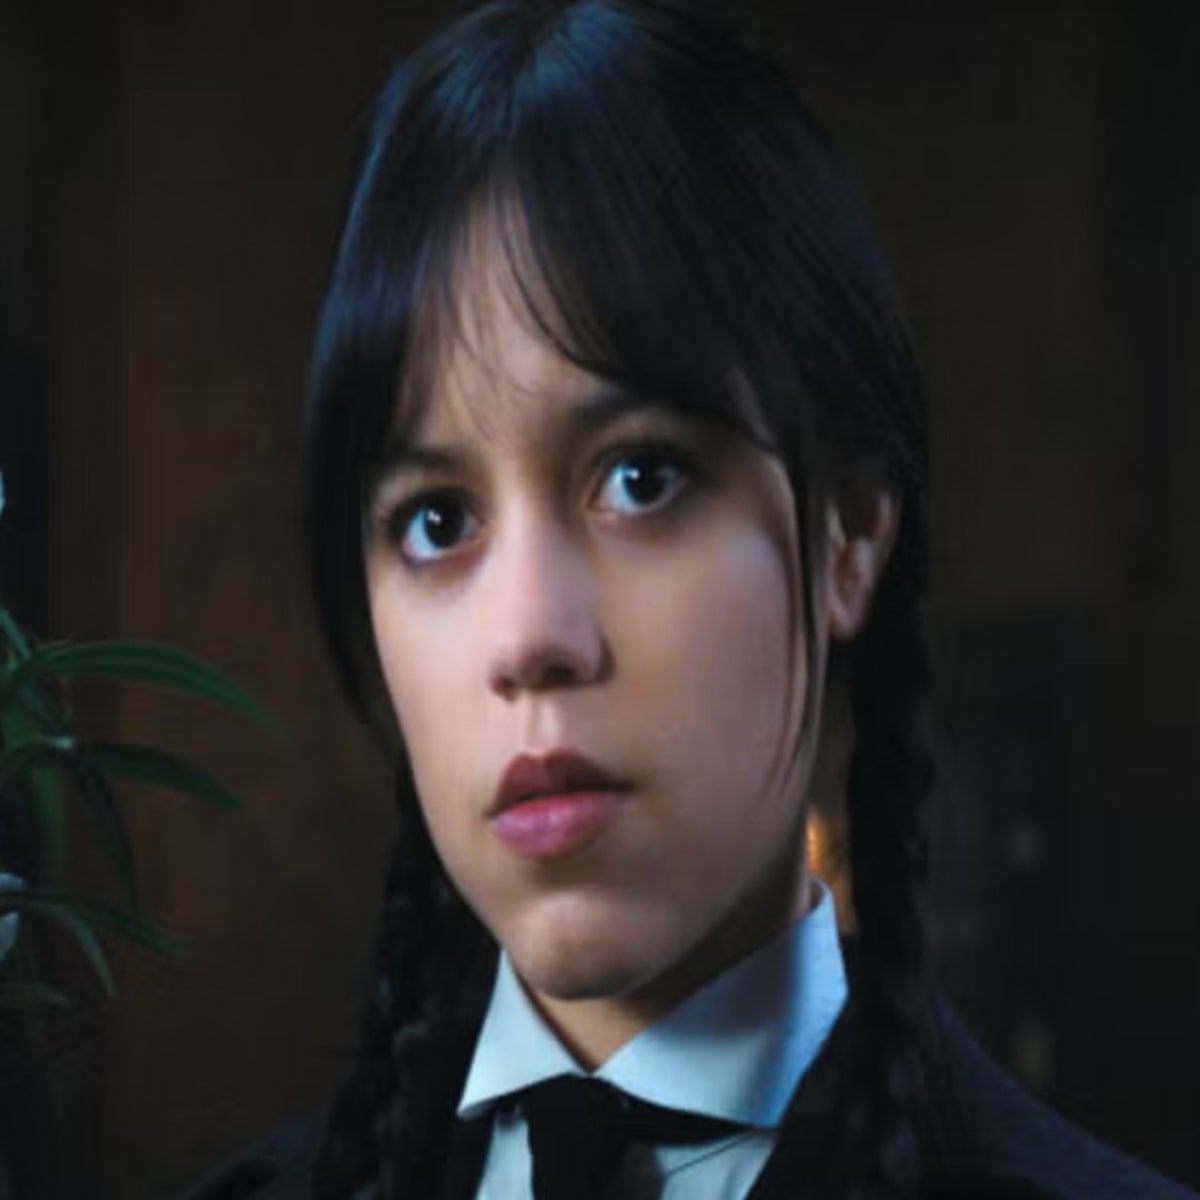 Christina Ricci Joins 'Wednesday', Netflix's Addams Family Series – Deadline